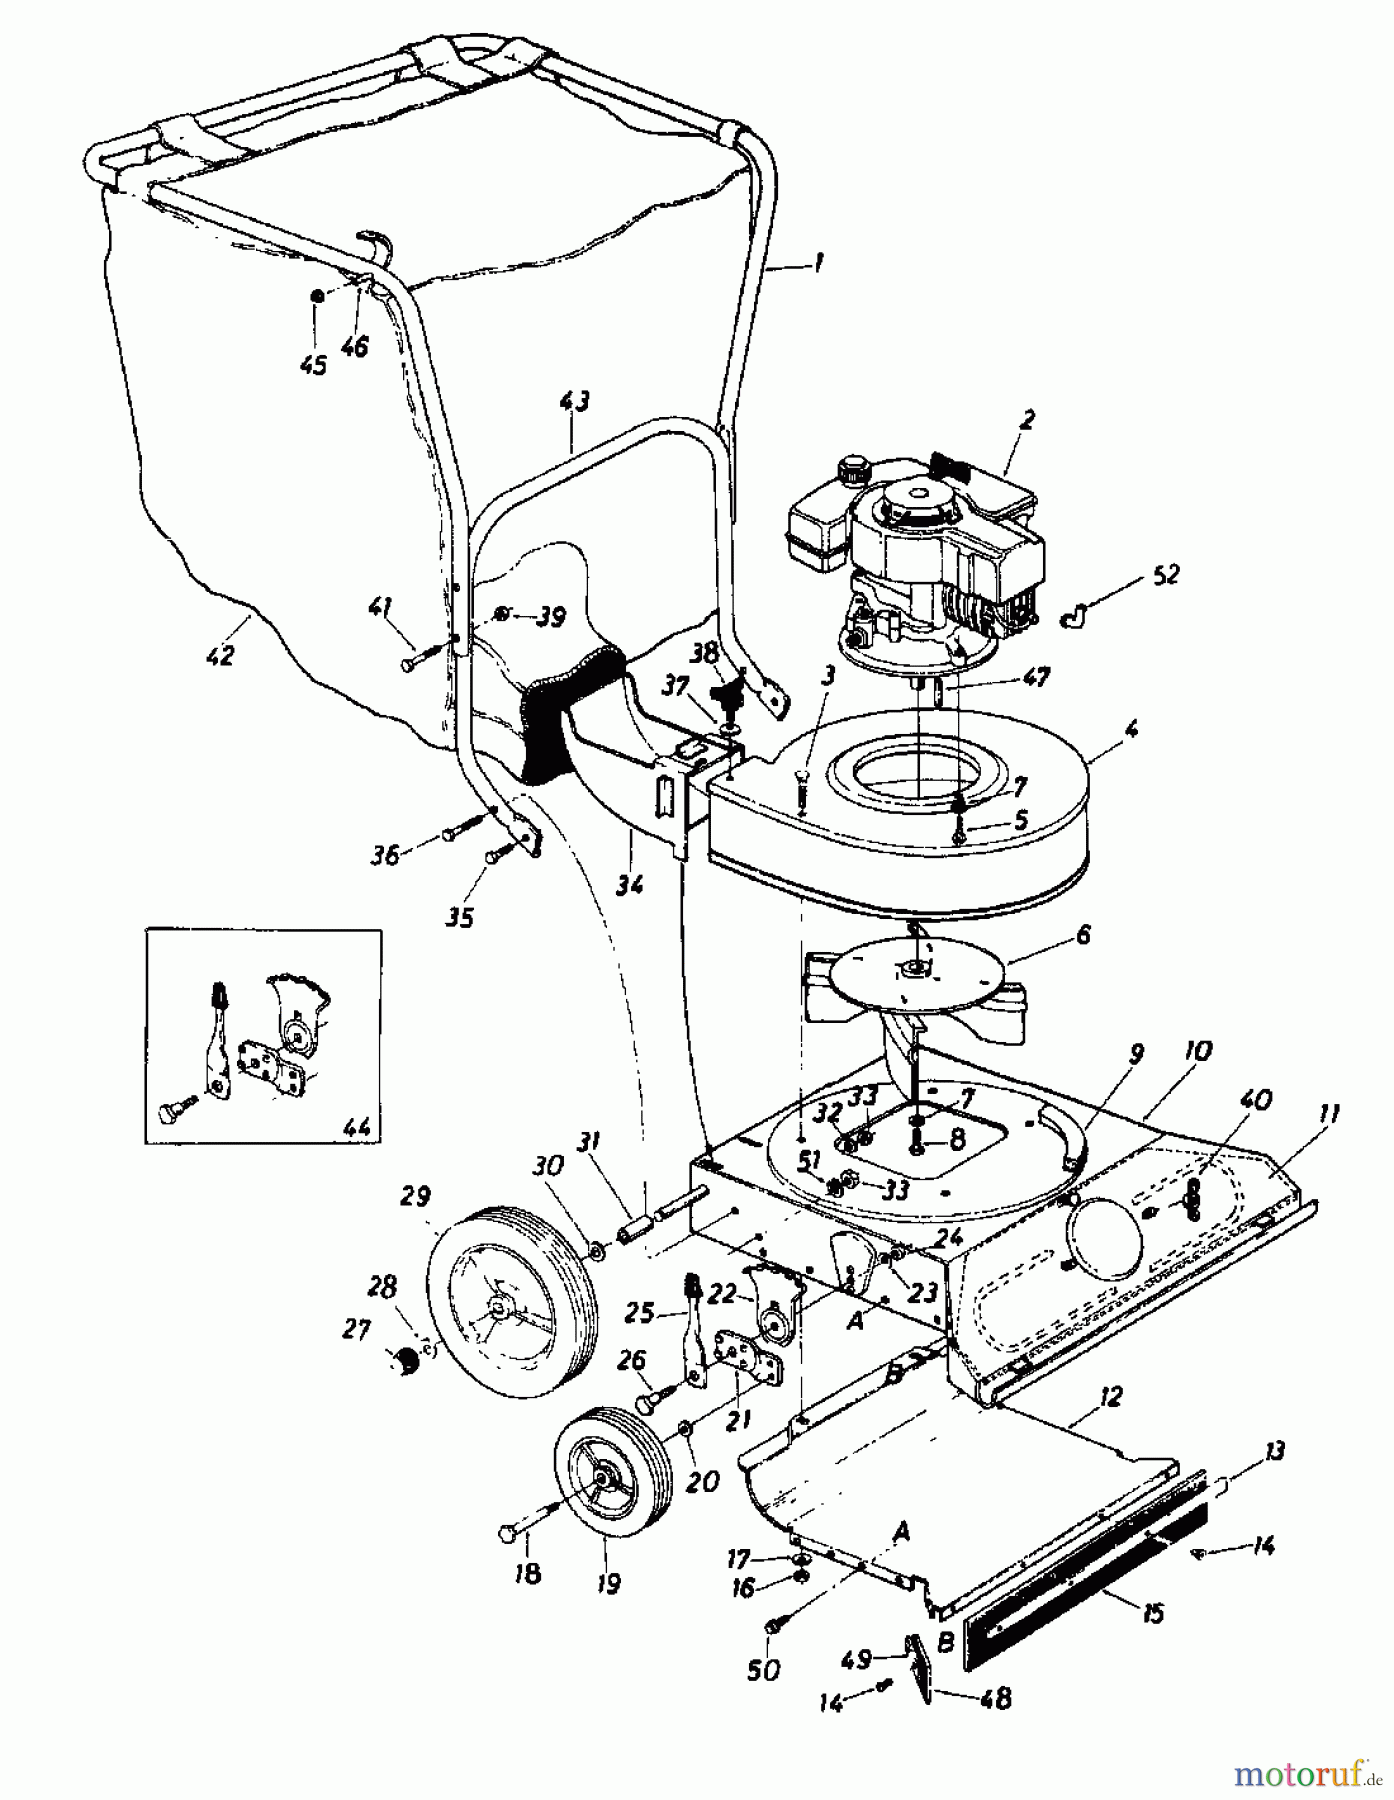  MTD Leaf blower, Blower vac Air-Vac 660 240-6600  (1990) Basic machine